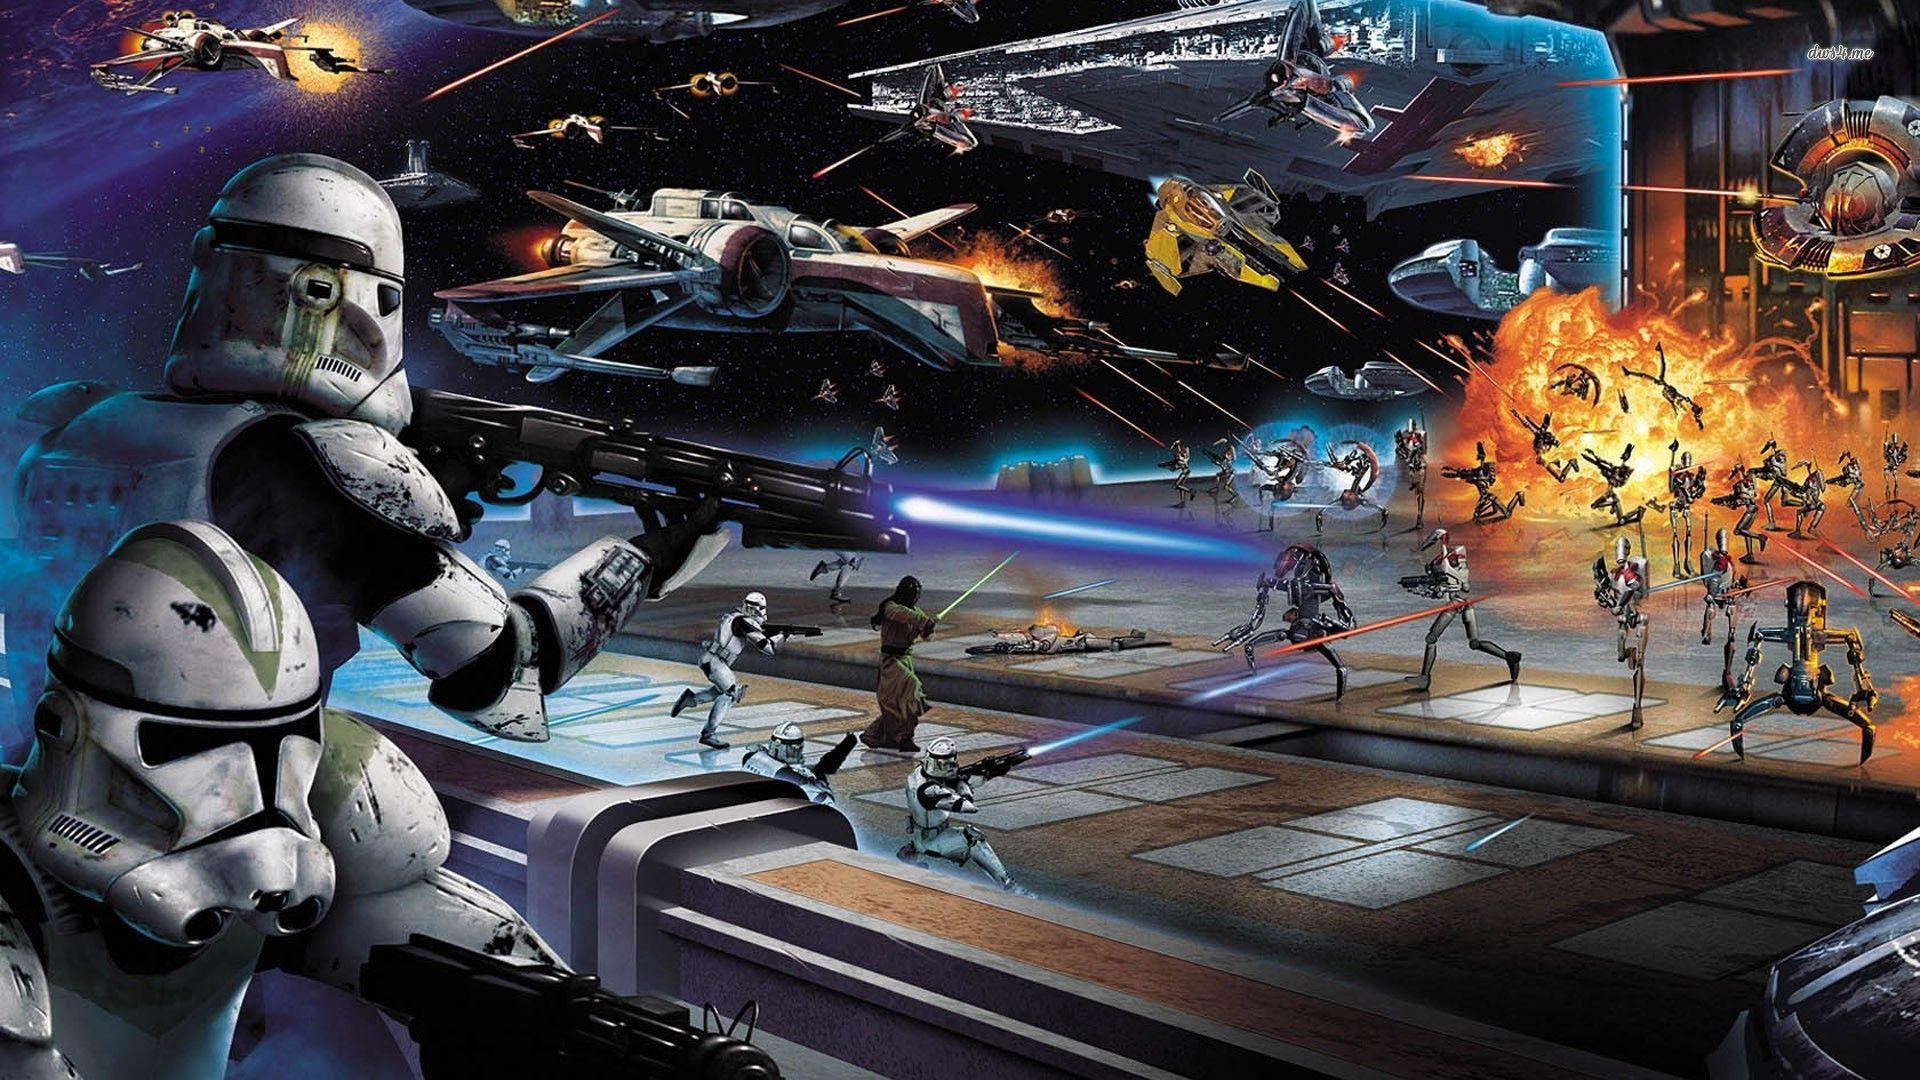 Gallery For > Star Wars Battlefront 2 Wallpaper